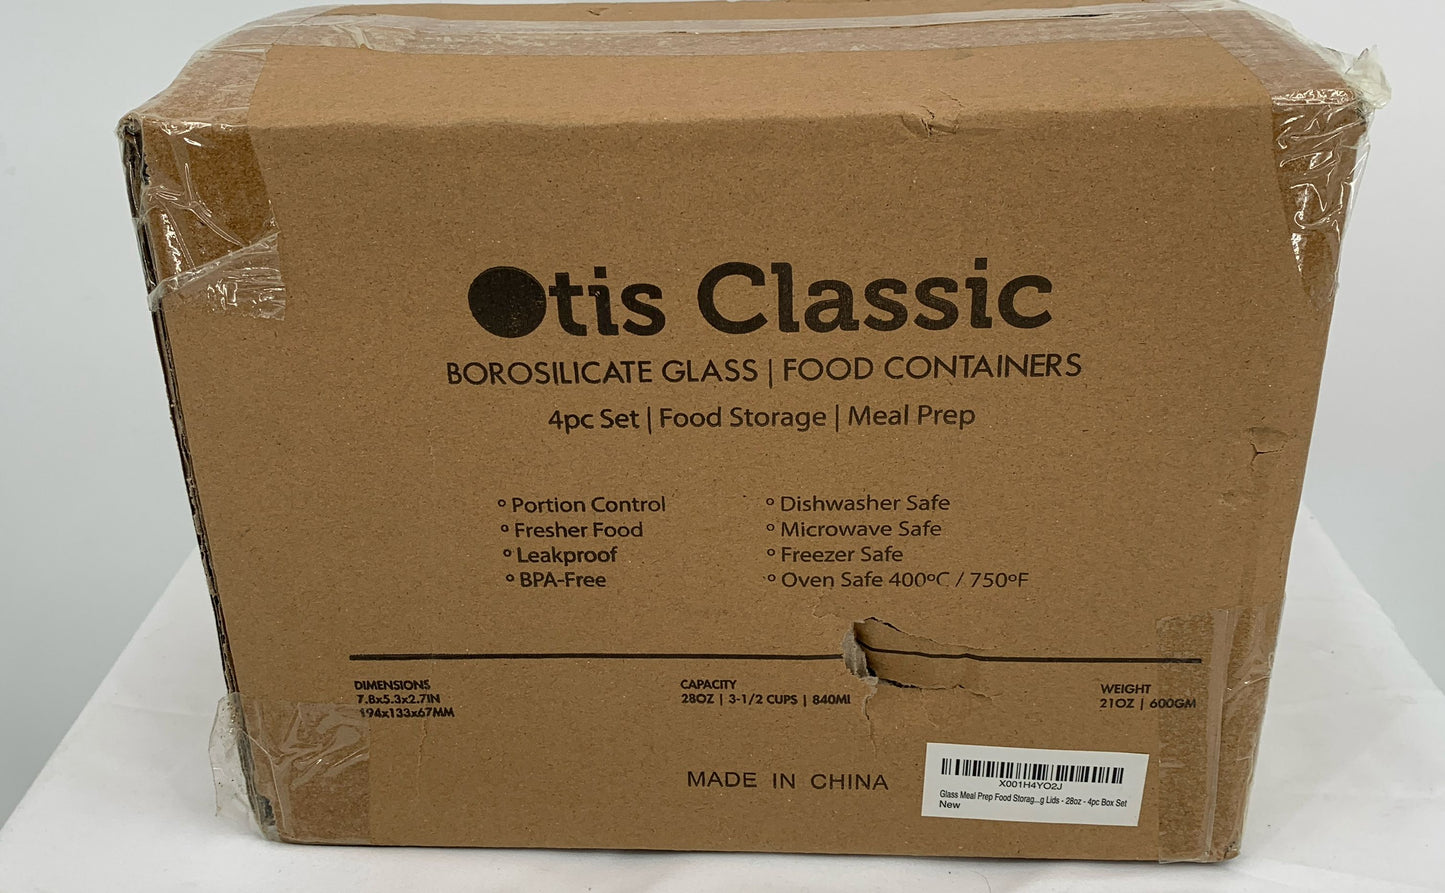 Otis Classic Borosilicate Glass Food Containers 4 Pc Set 28 Oz With Locking Lids